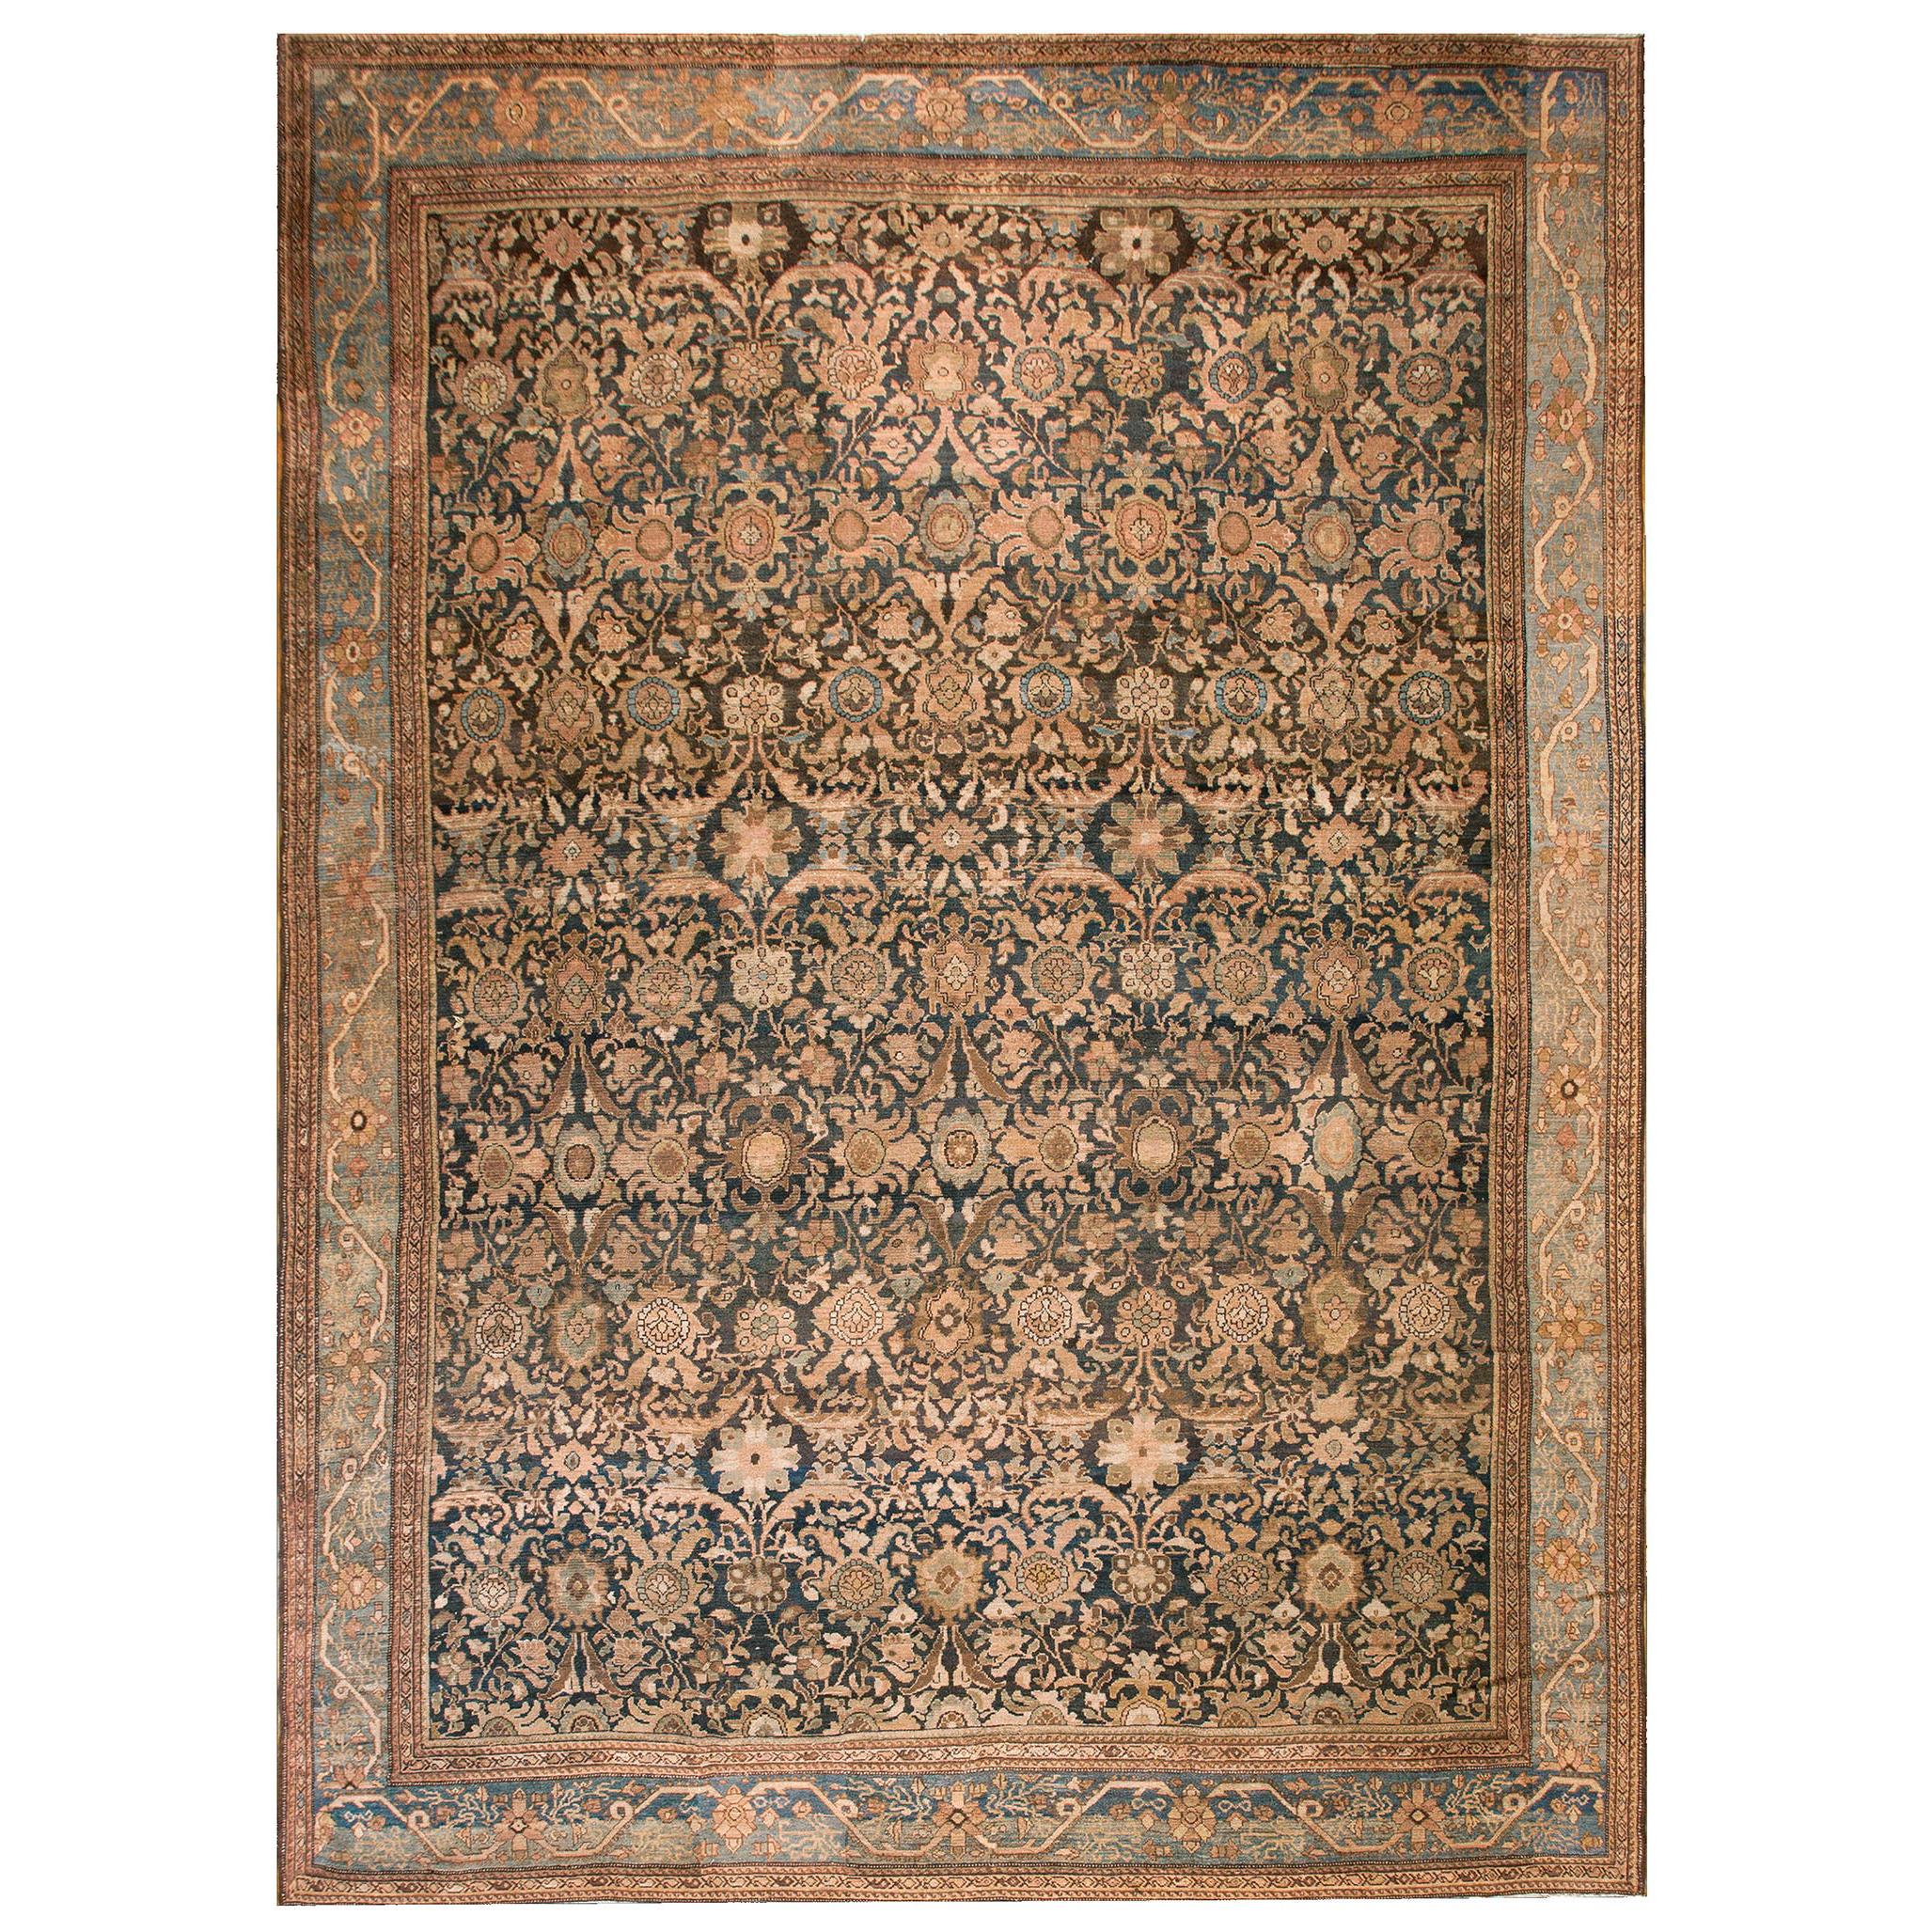 Late 19th Century Persian Malayer Carpet ( 11' 10" x 16' 6" - 360 x 503 cm)